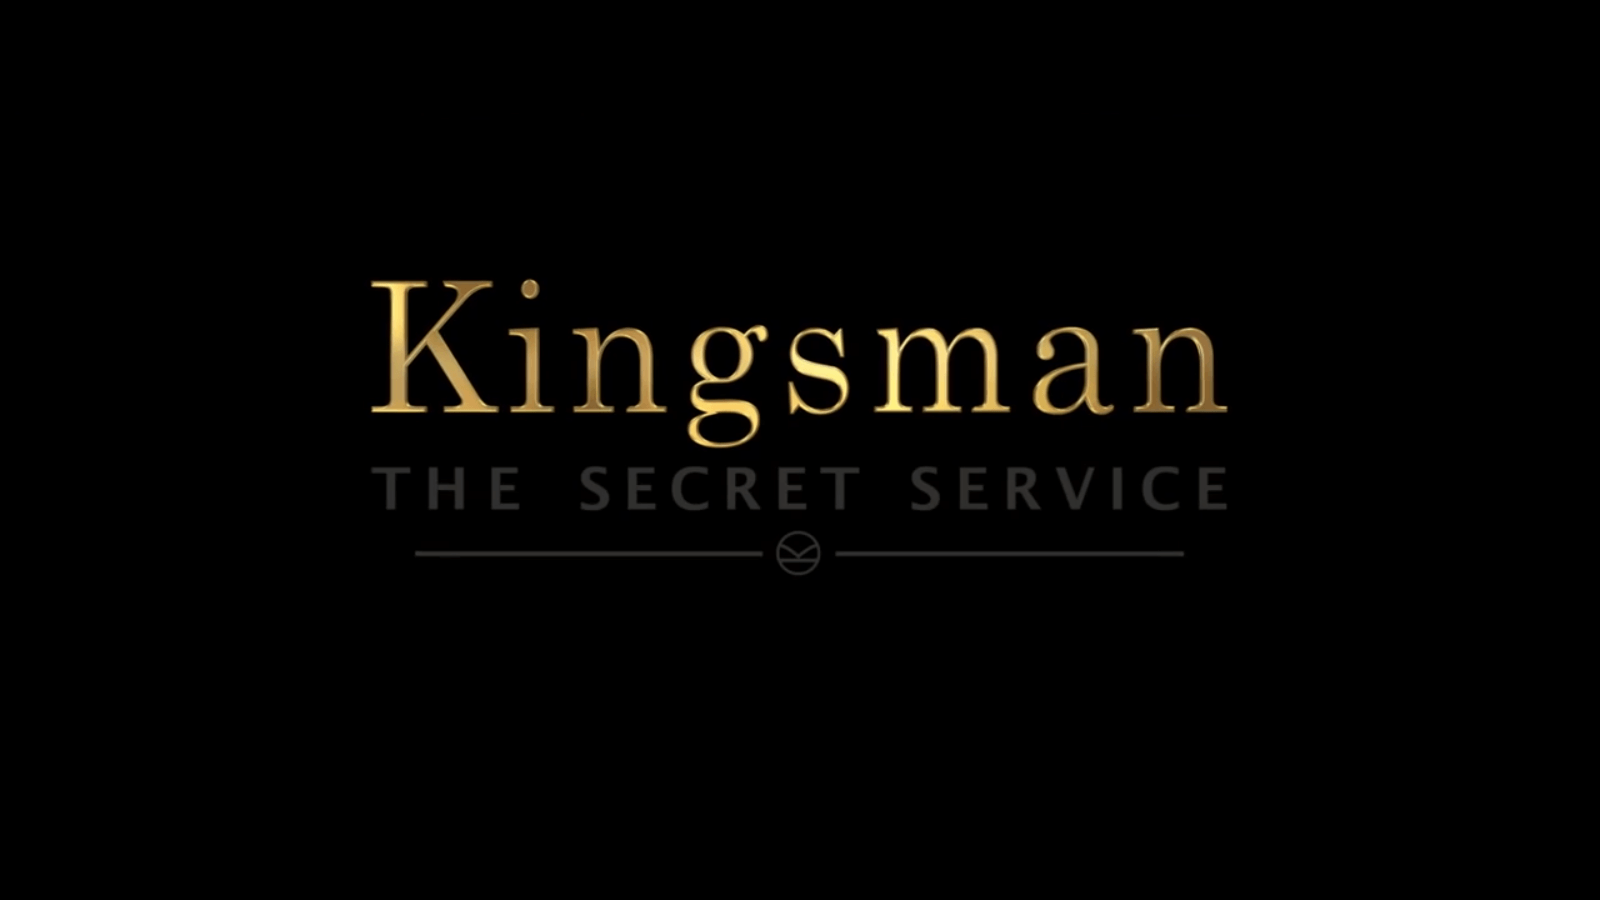 KINGSMAN - THE SECRET SERVICE | Text Effect - Photoshop Template by Sahin  Düzgün on Dribbble